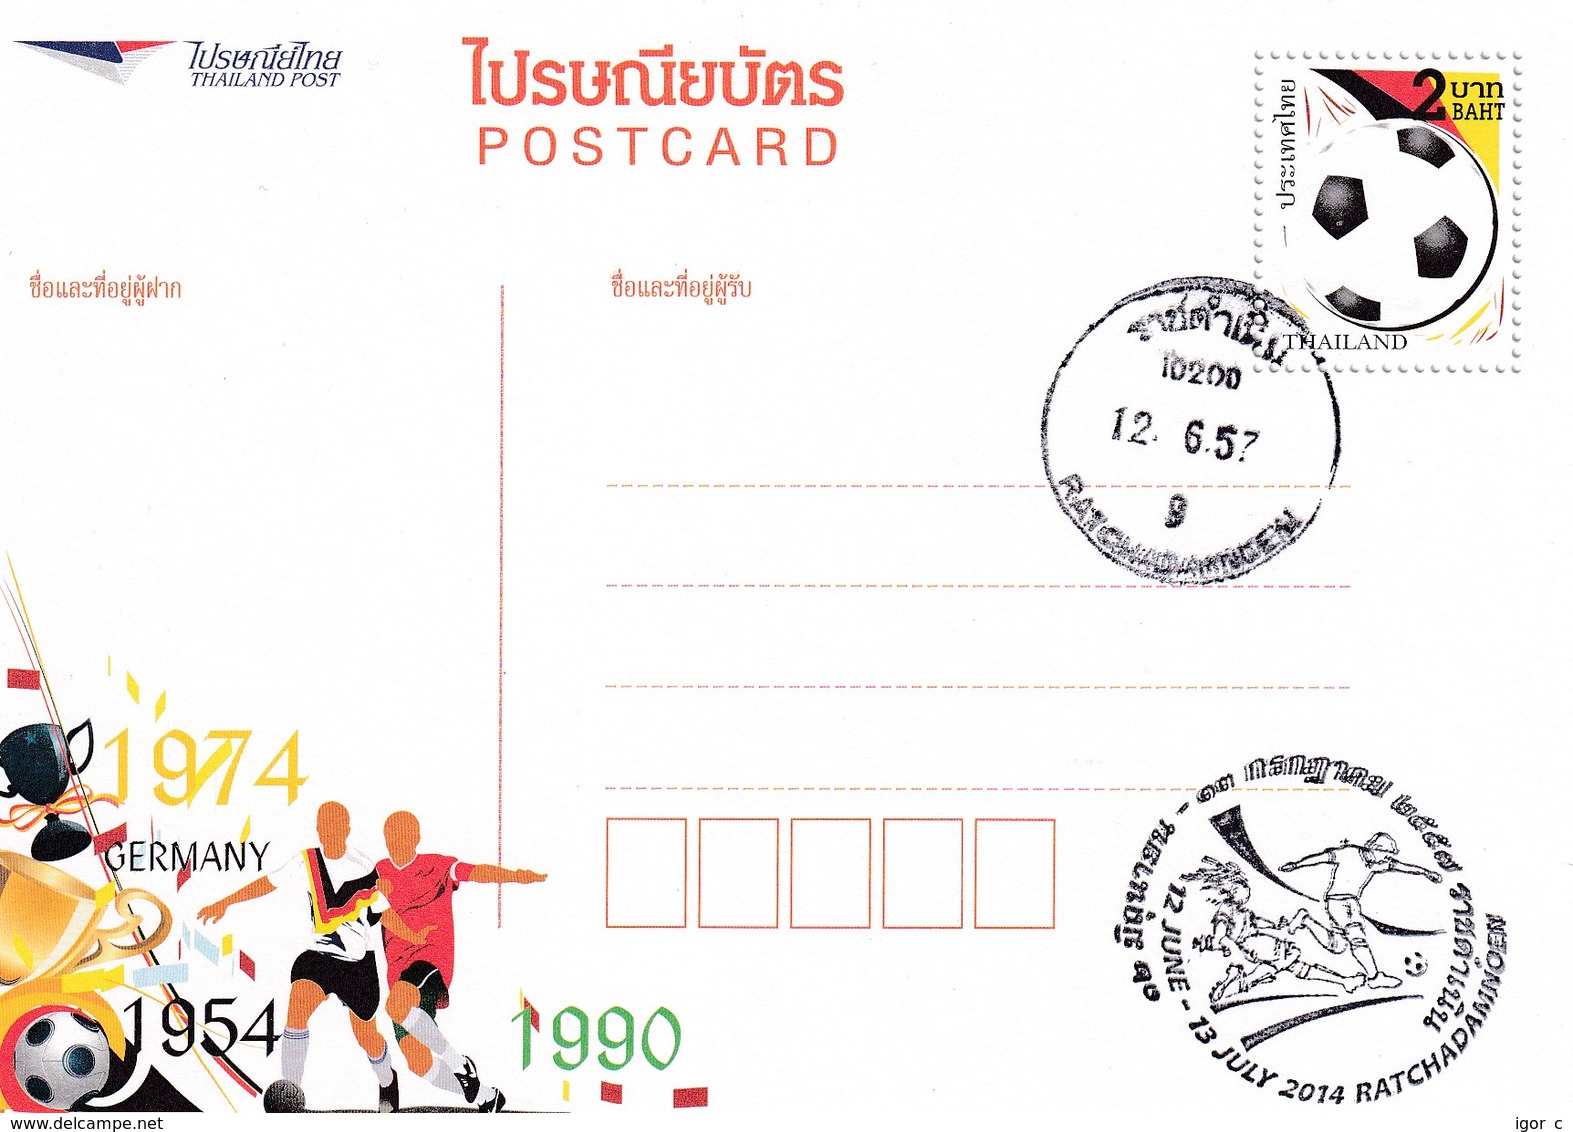 Thailand 2014 Postal Stationery Card: Football Fussball Soccer Calcio; FIFA World Cup 1954 1974 1990 Germany Champion - 1954 – Svizzera